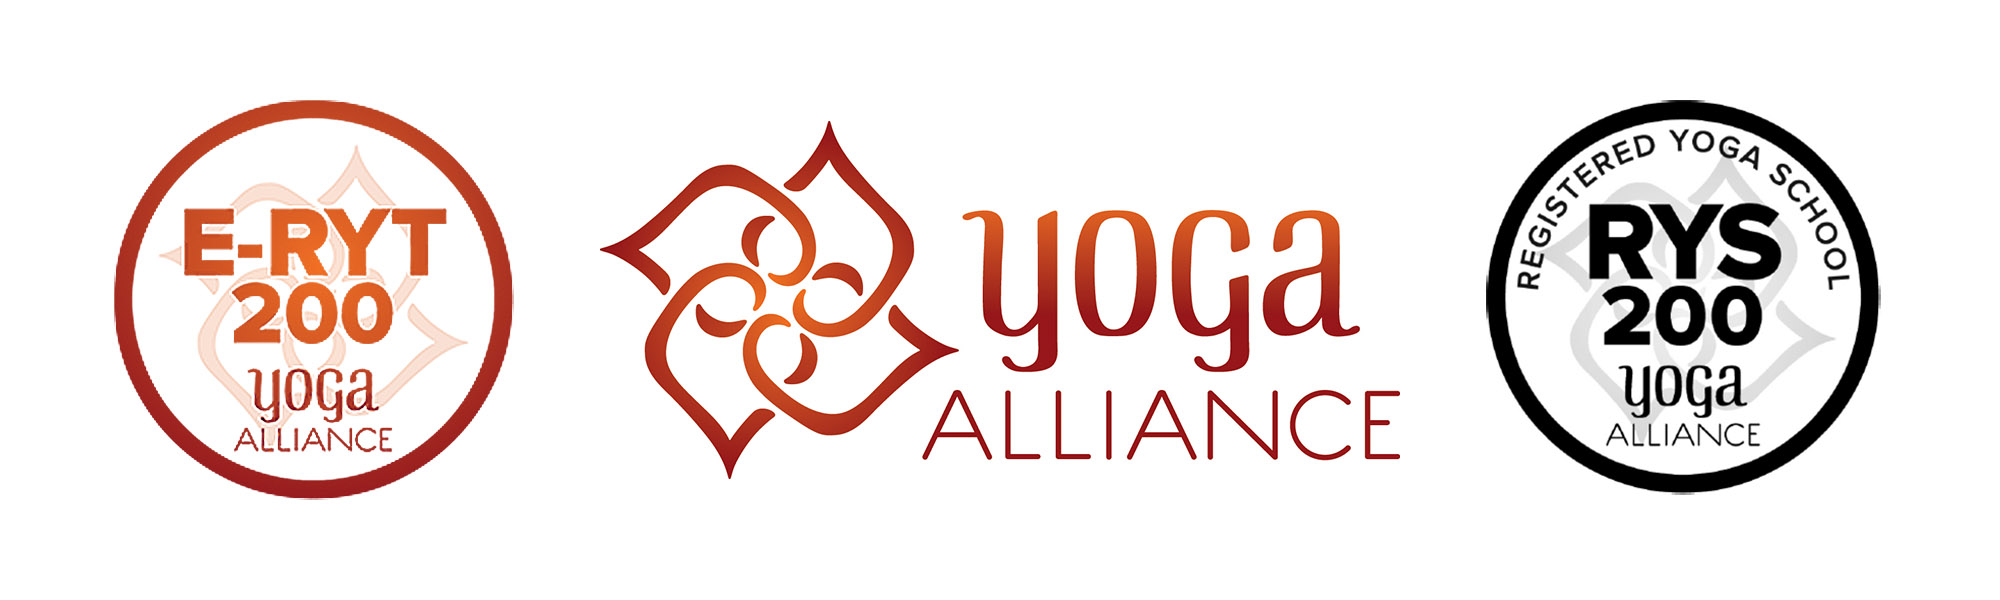 200 Hour Yoga Alliance Certification